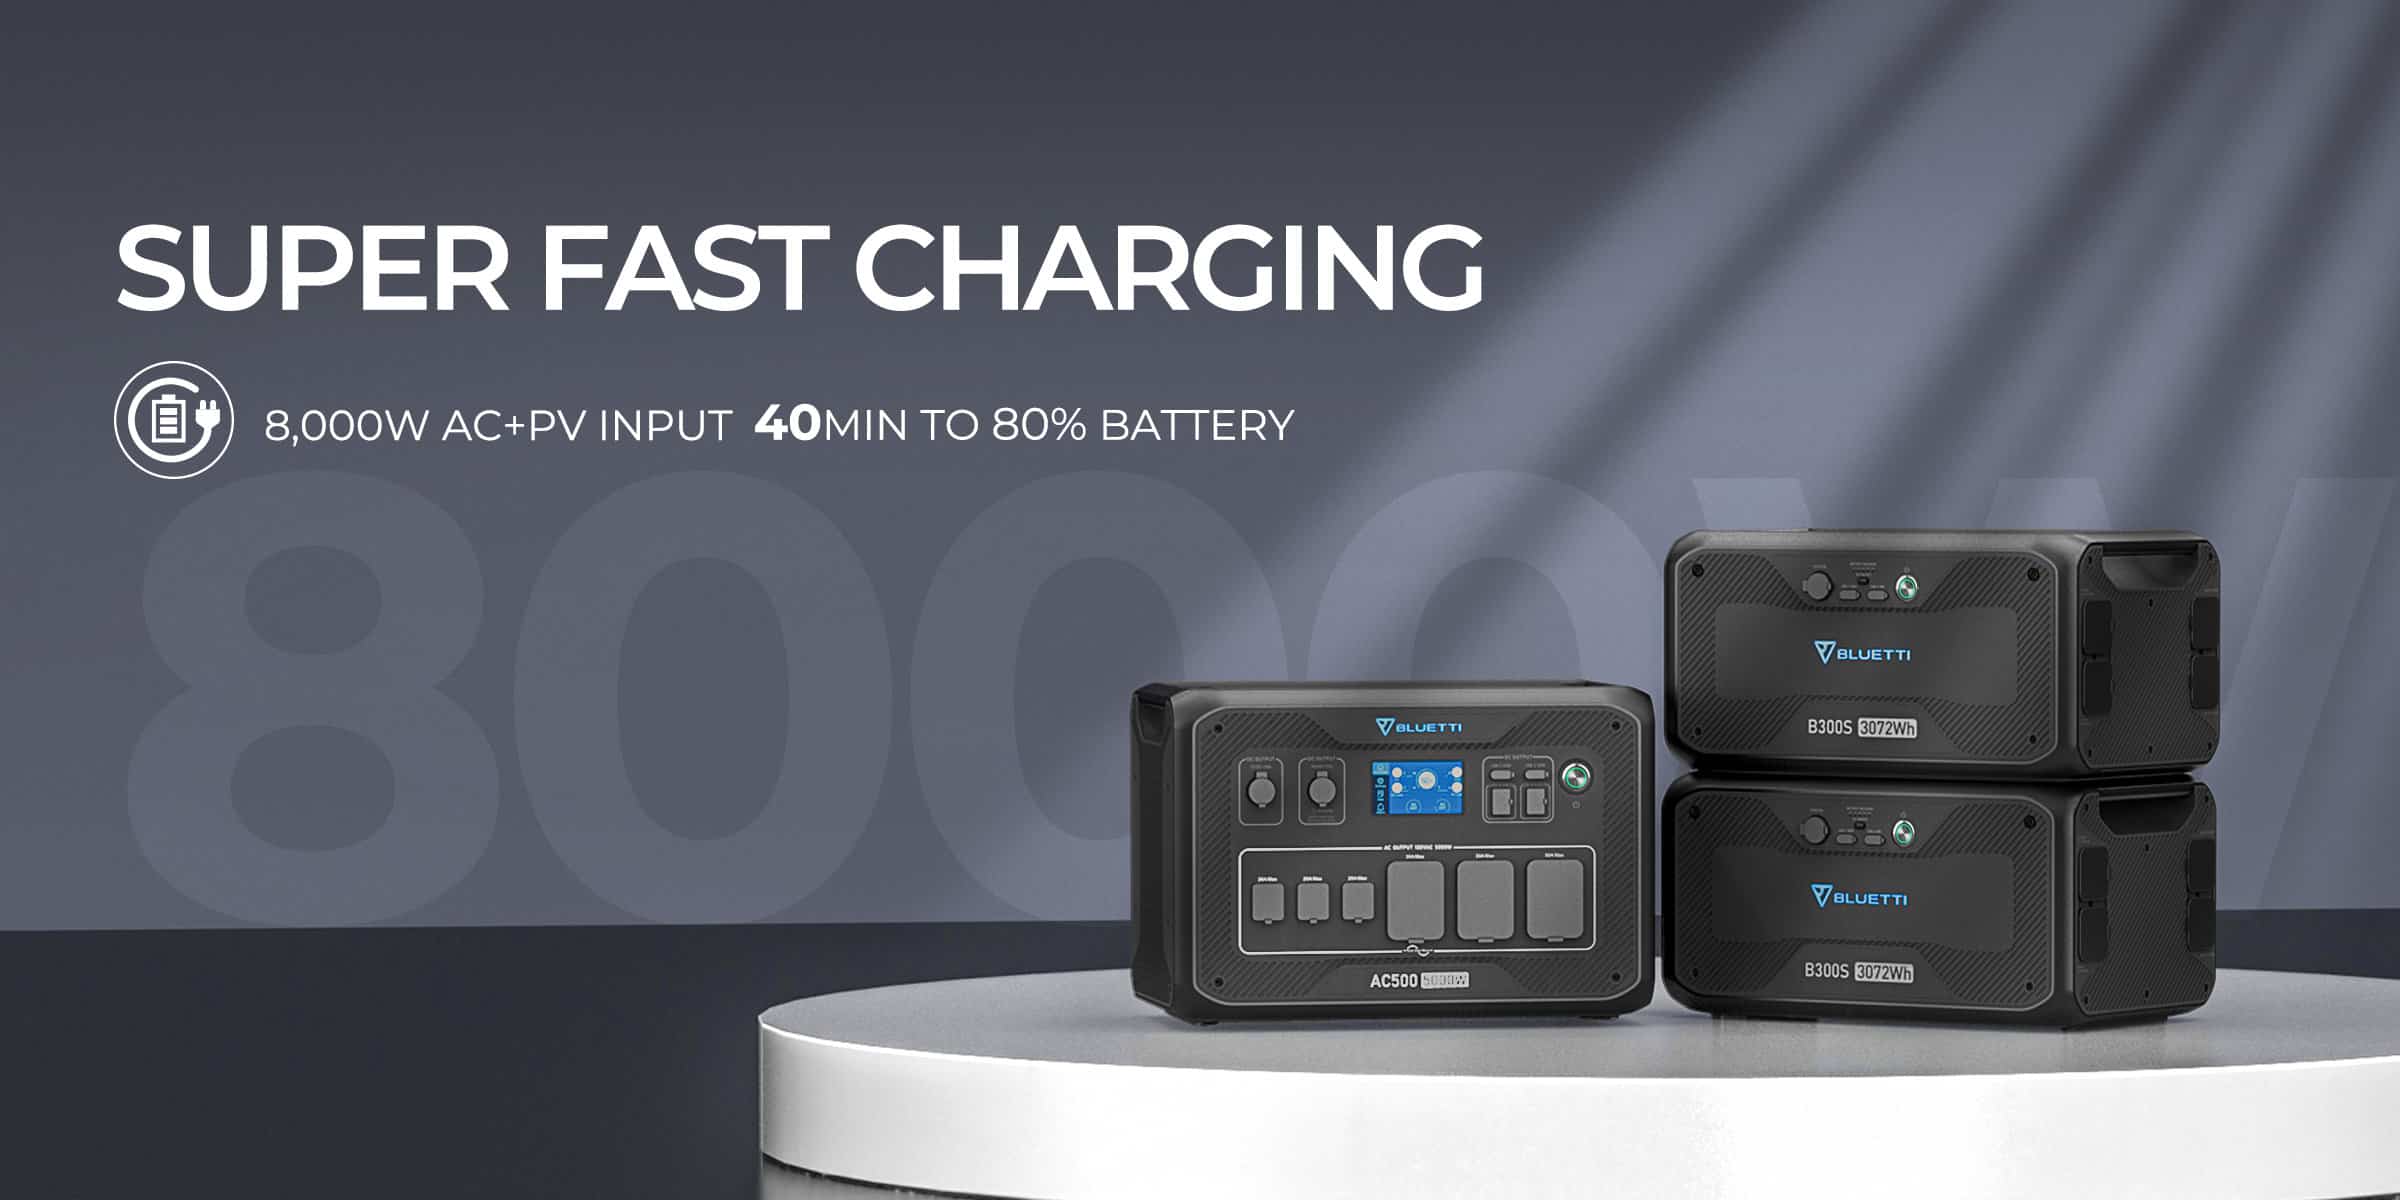 ac500s super fast charging